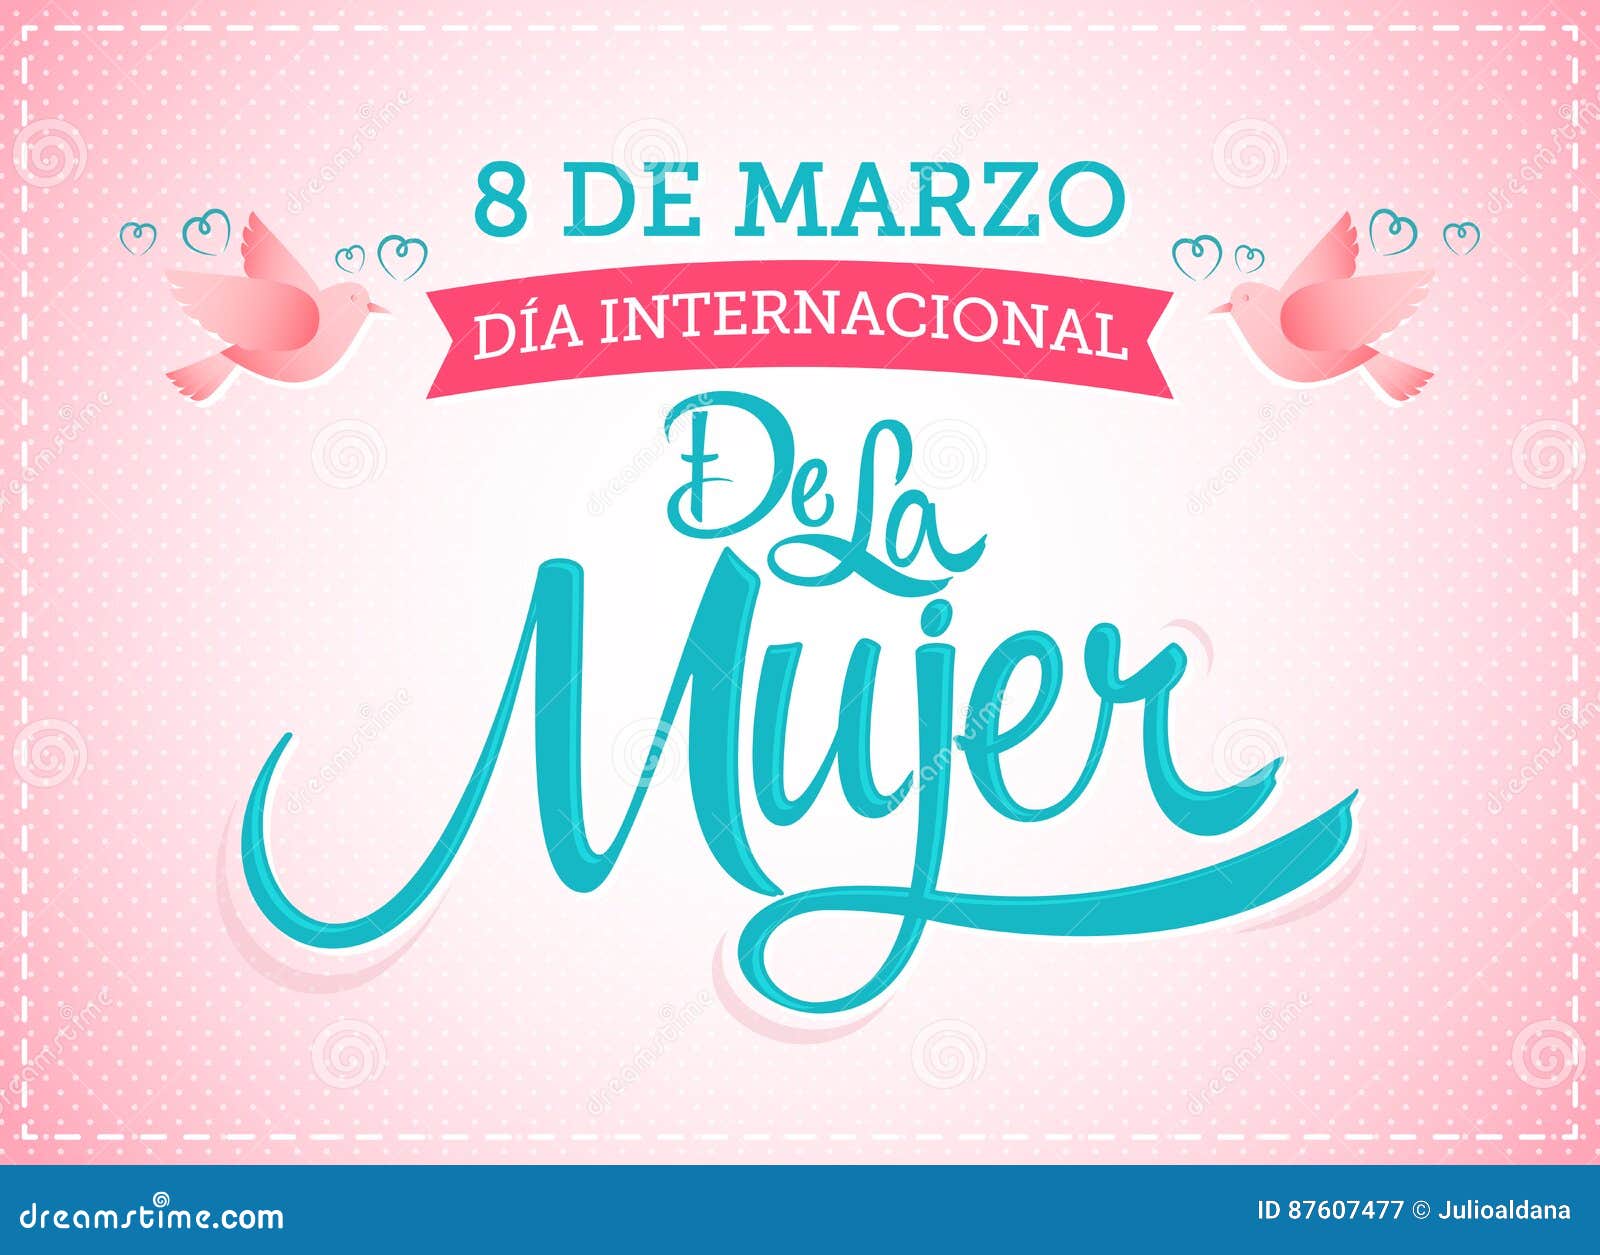 8 de marzo dia internacional de la mujer, spanish translation: march 8 international womens day